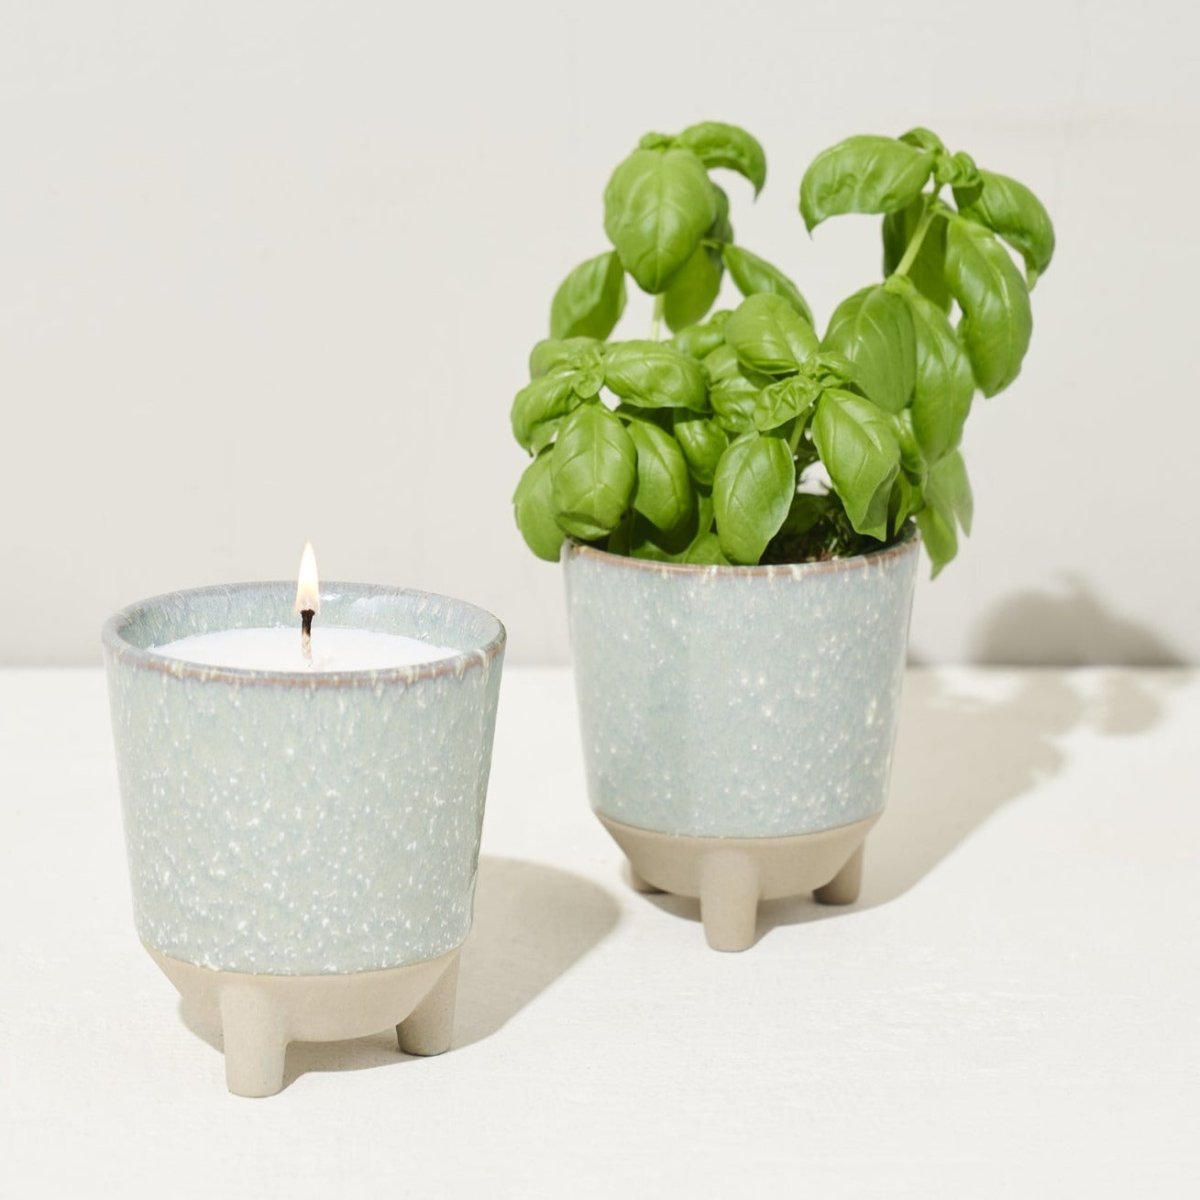 Modern Sprout Glow & Grow Kits - lily & onyx